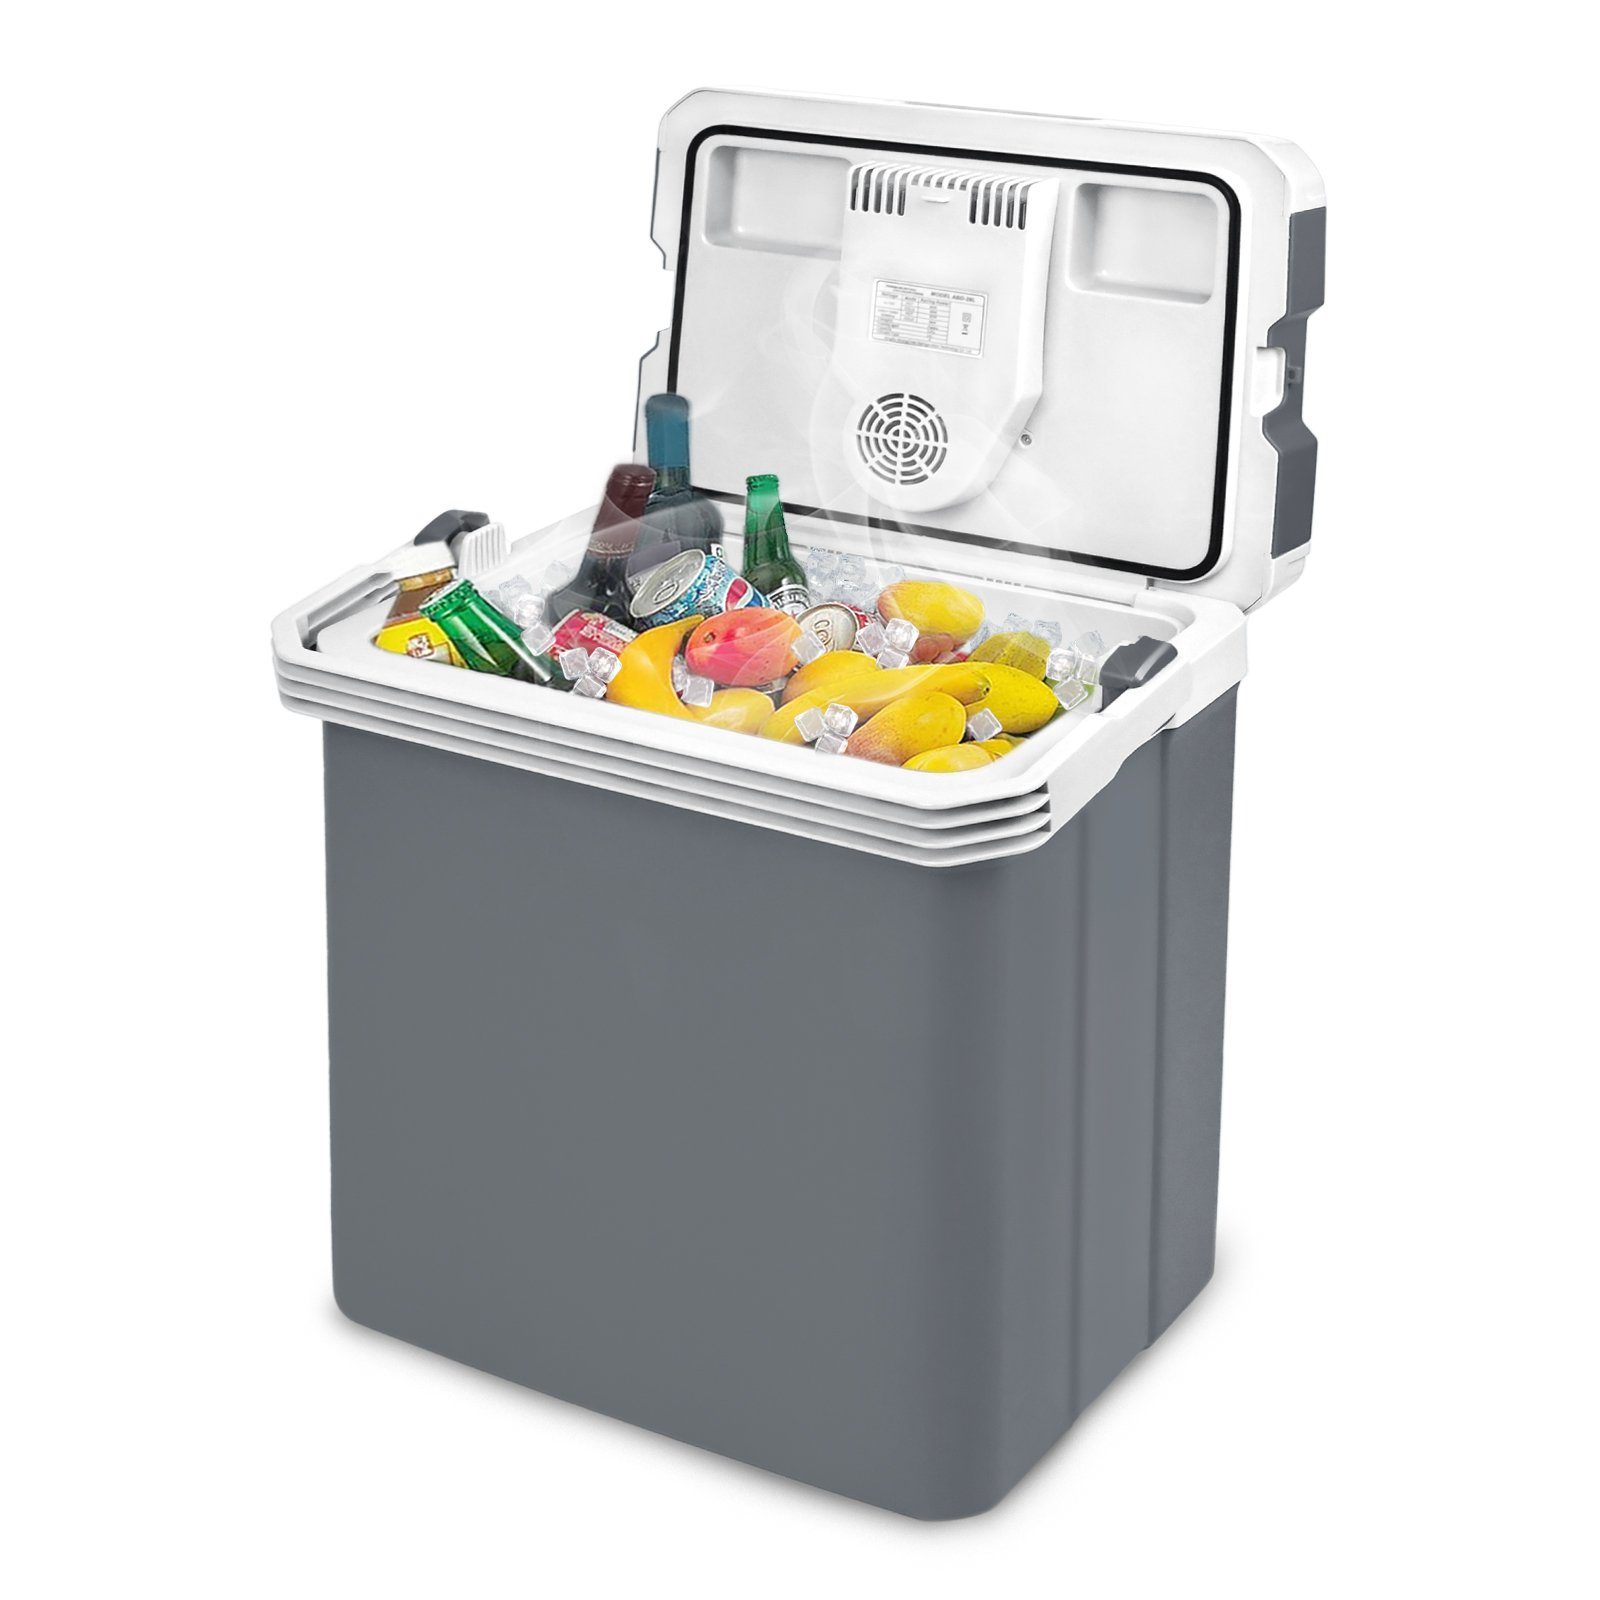 UISEBRT Outdoor-Flaschenkühler Kühlbox Thermo-Elektrisch 12 V 220V